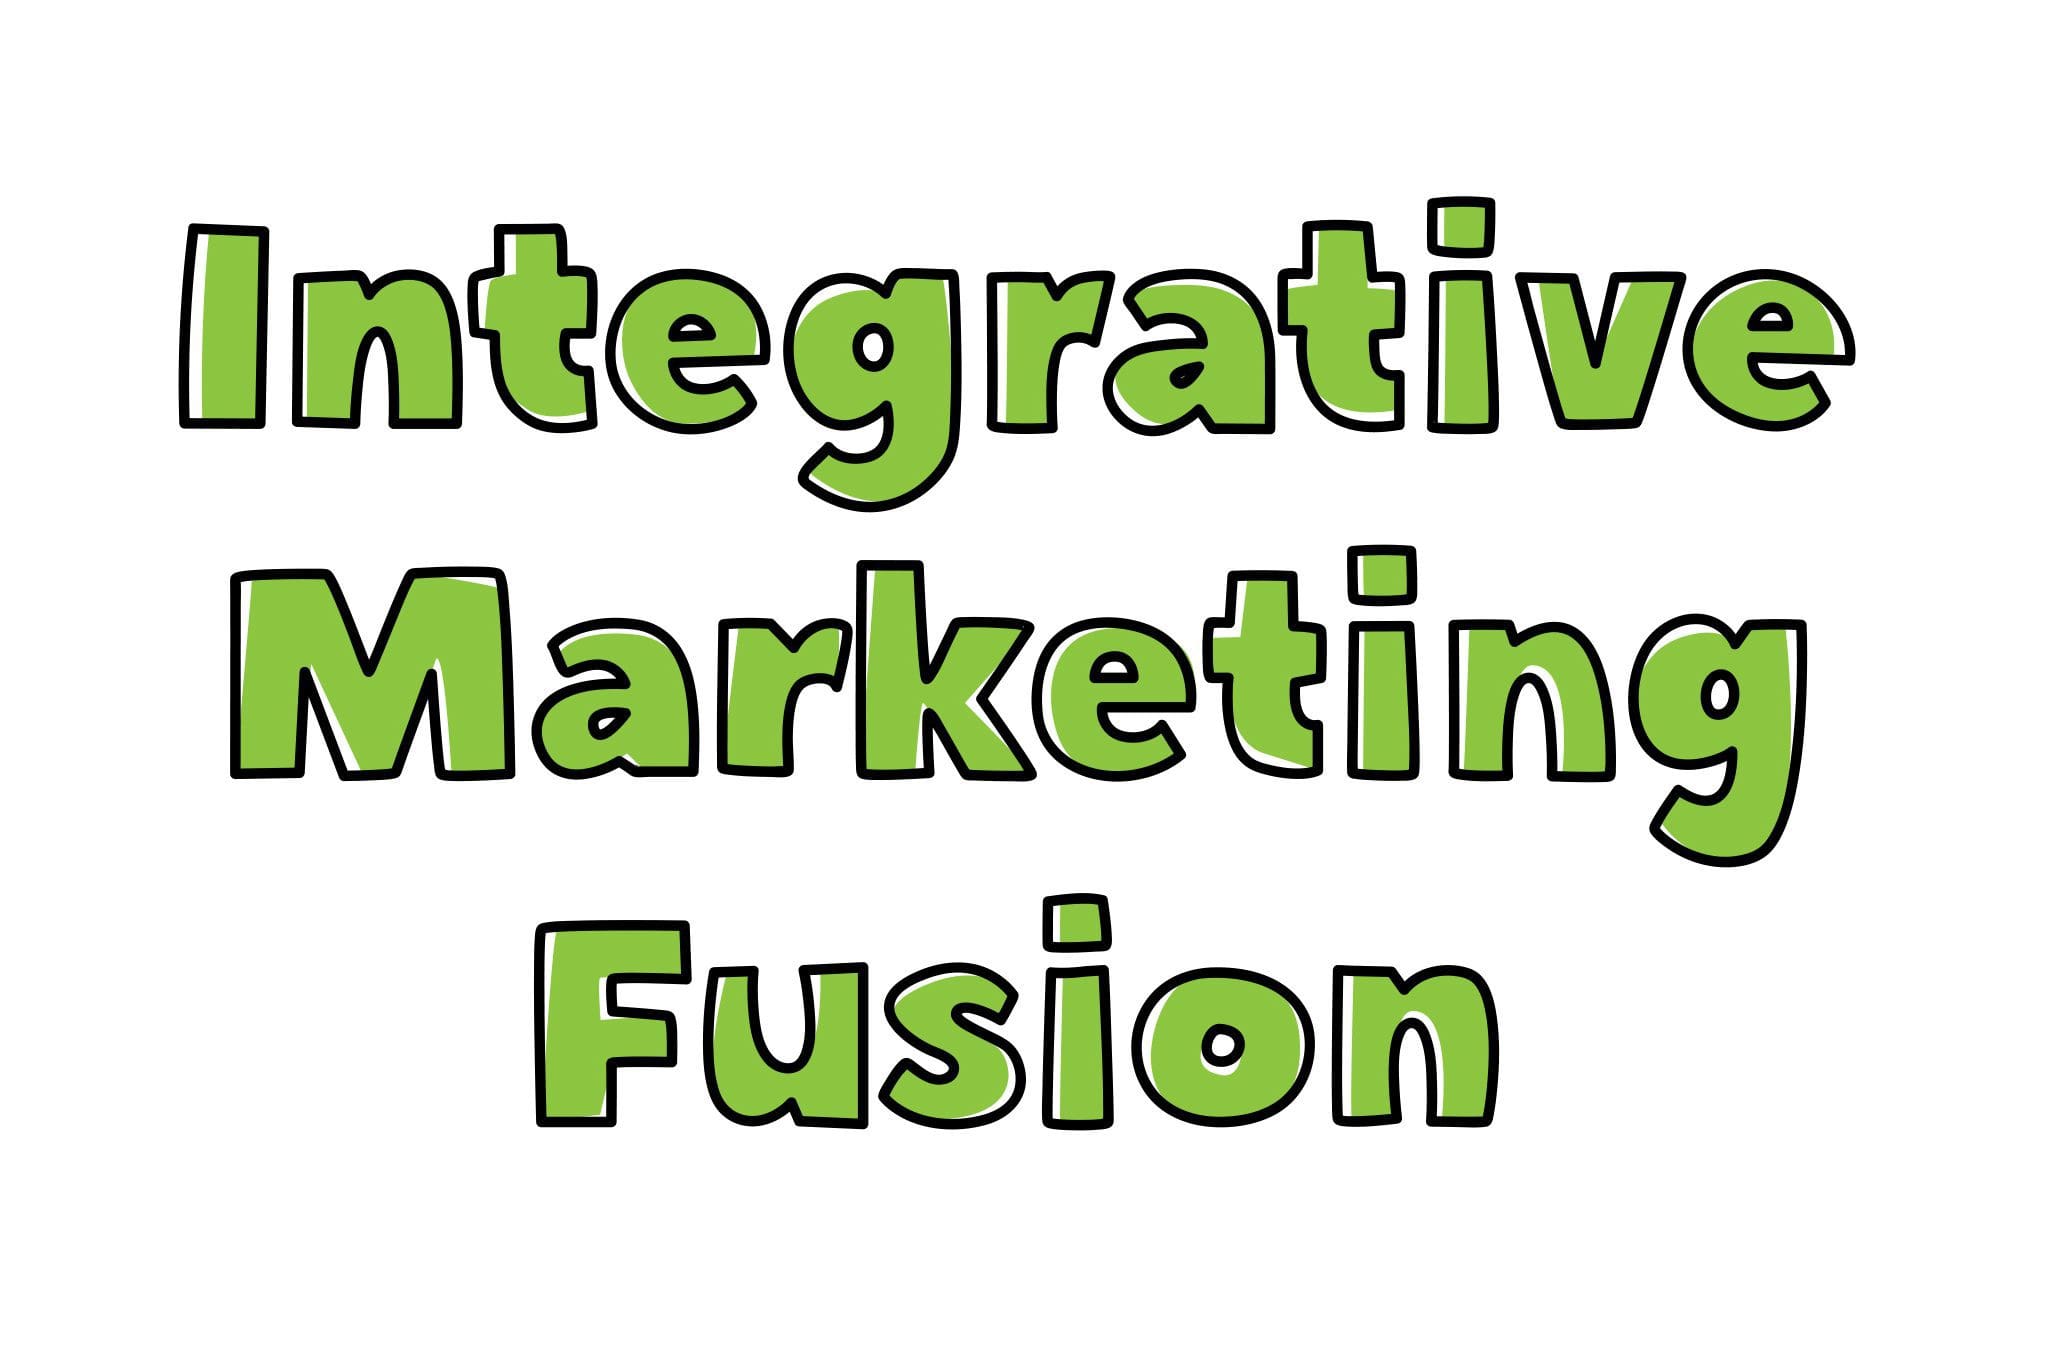 integrative marketing fusion, john r kowalski